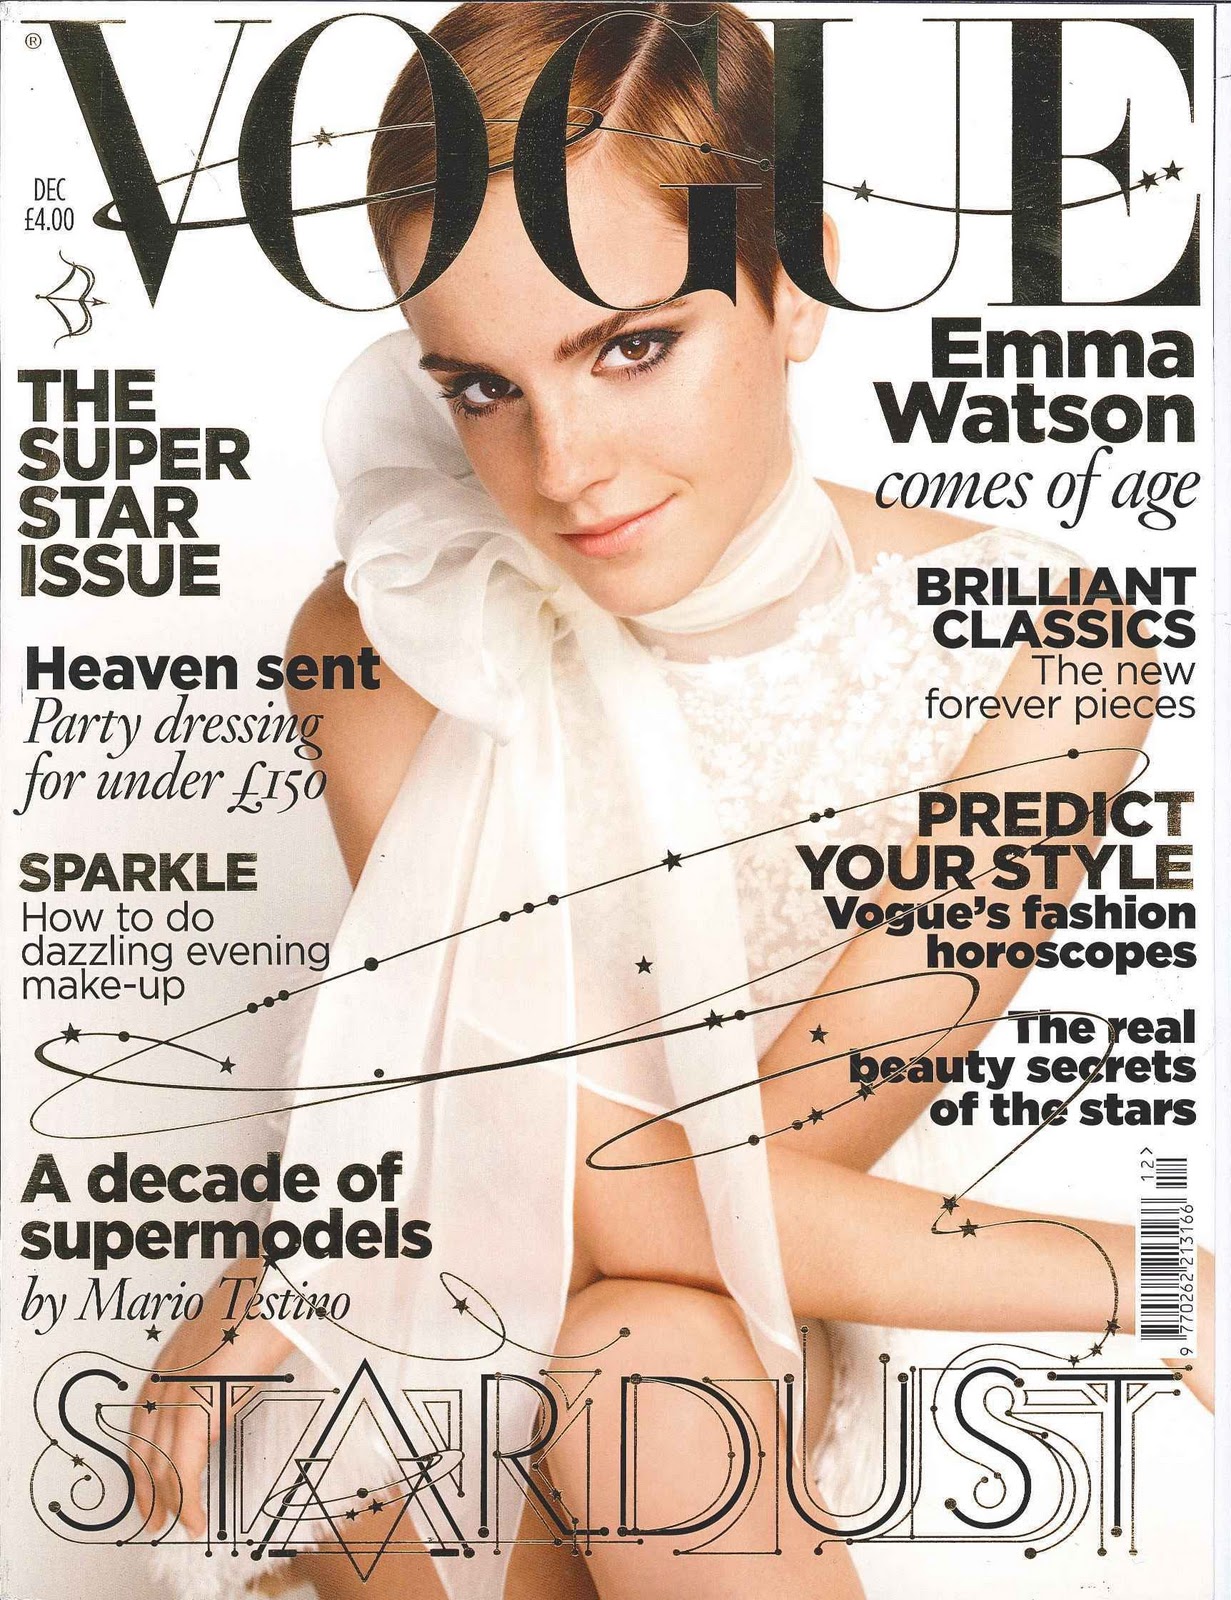 http://2.bp.blogspot.com/-VudMvjMBBQc/T2mWU2jCWVI/AAAAAAAADQQ/b_qesFo5HGY/s1600/Emma+Watson+covers+Vogue+UK+December+2010.jpg